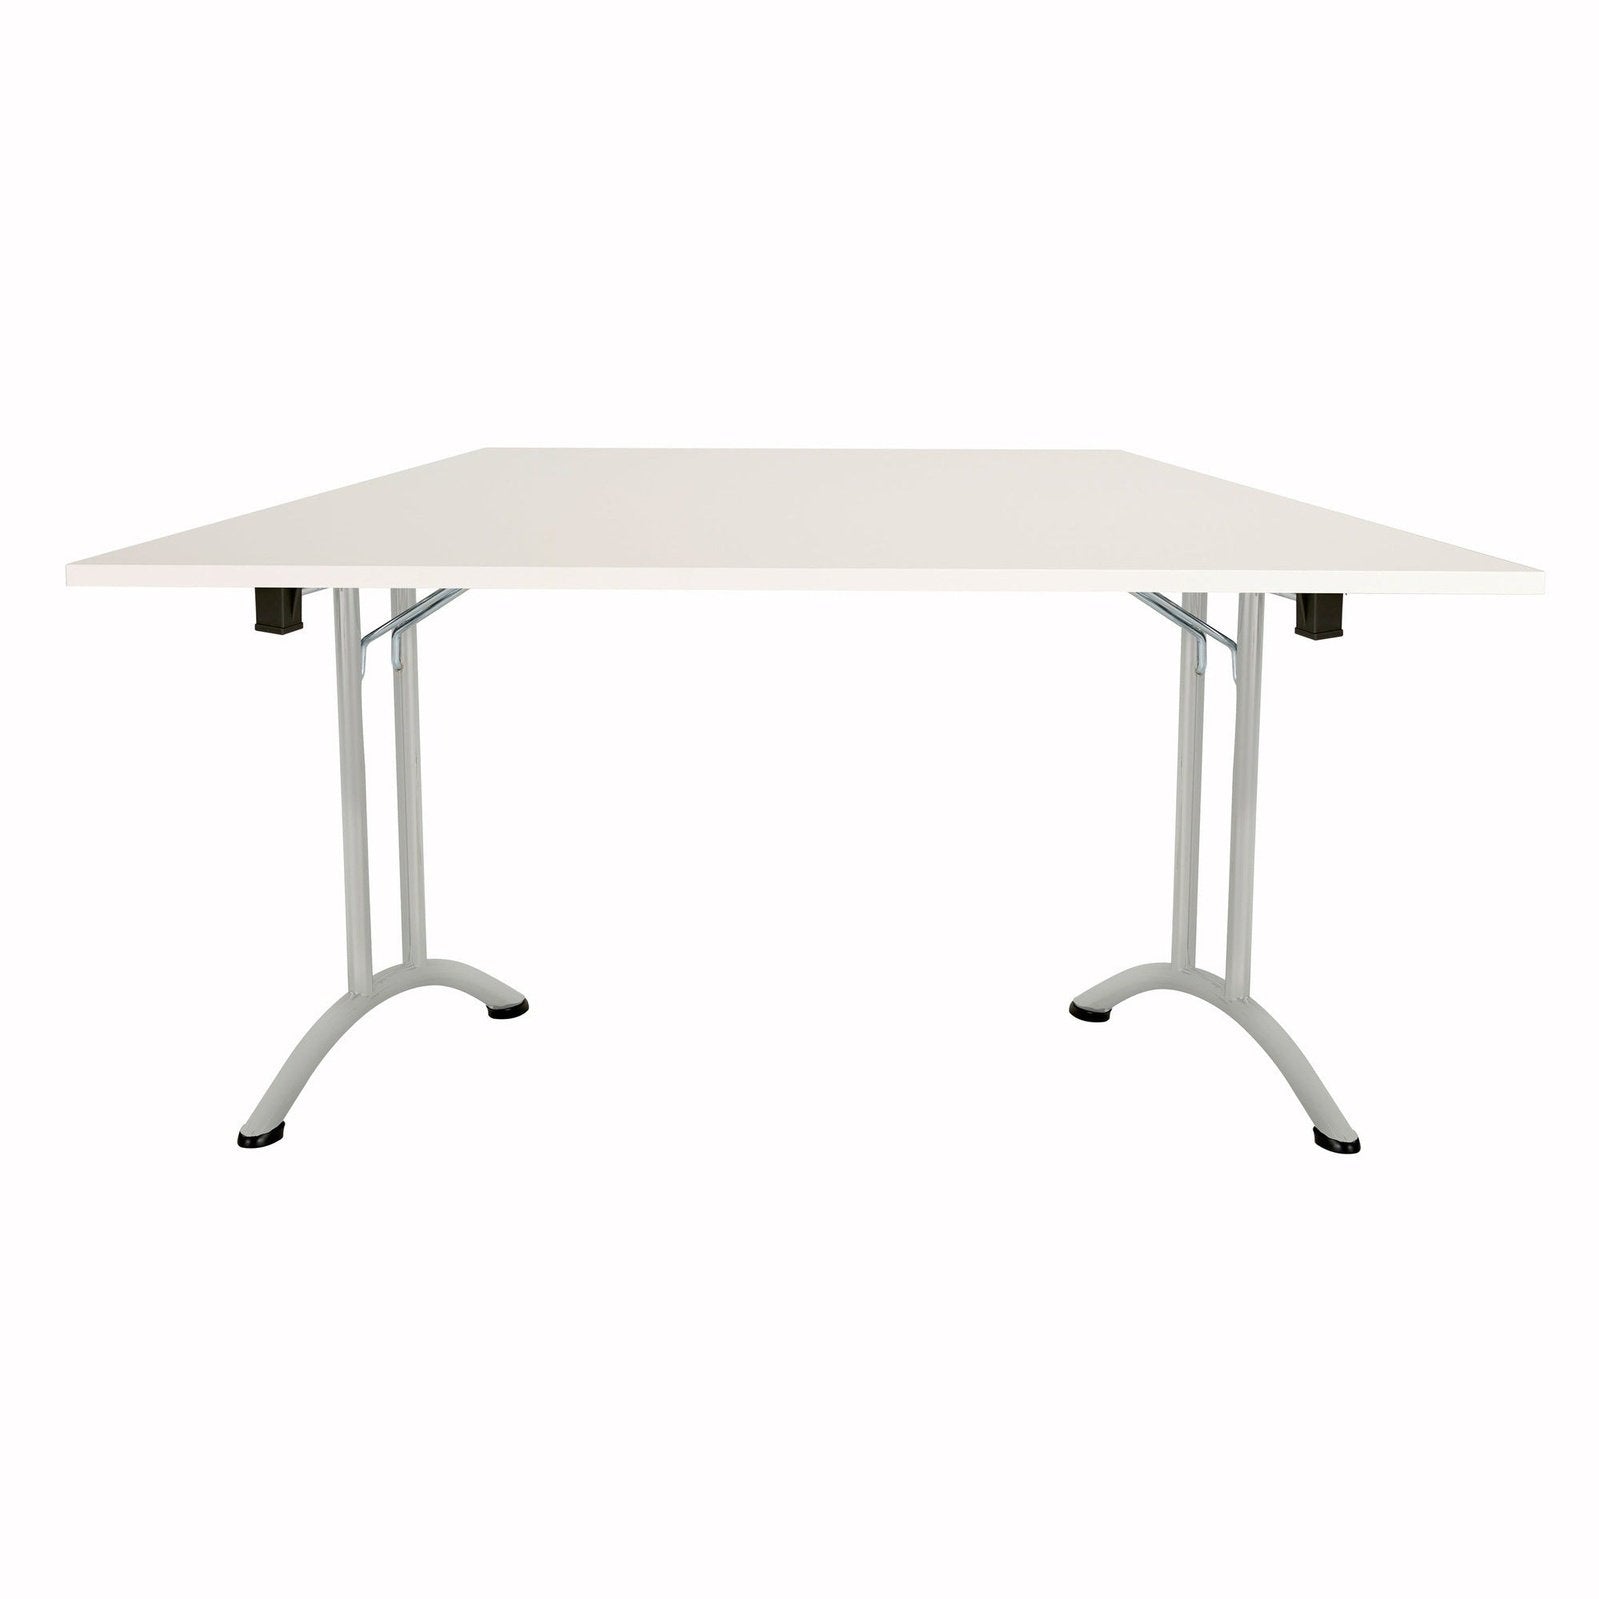 One Union Trapezoidal 1600mm Folding Table